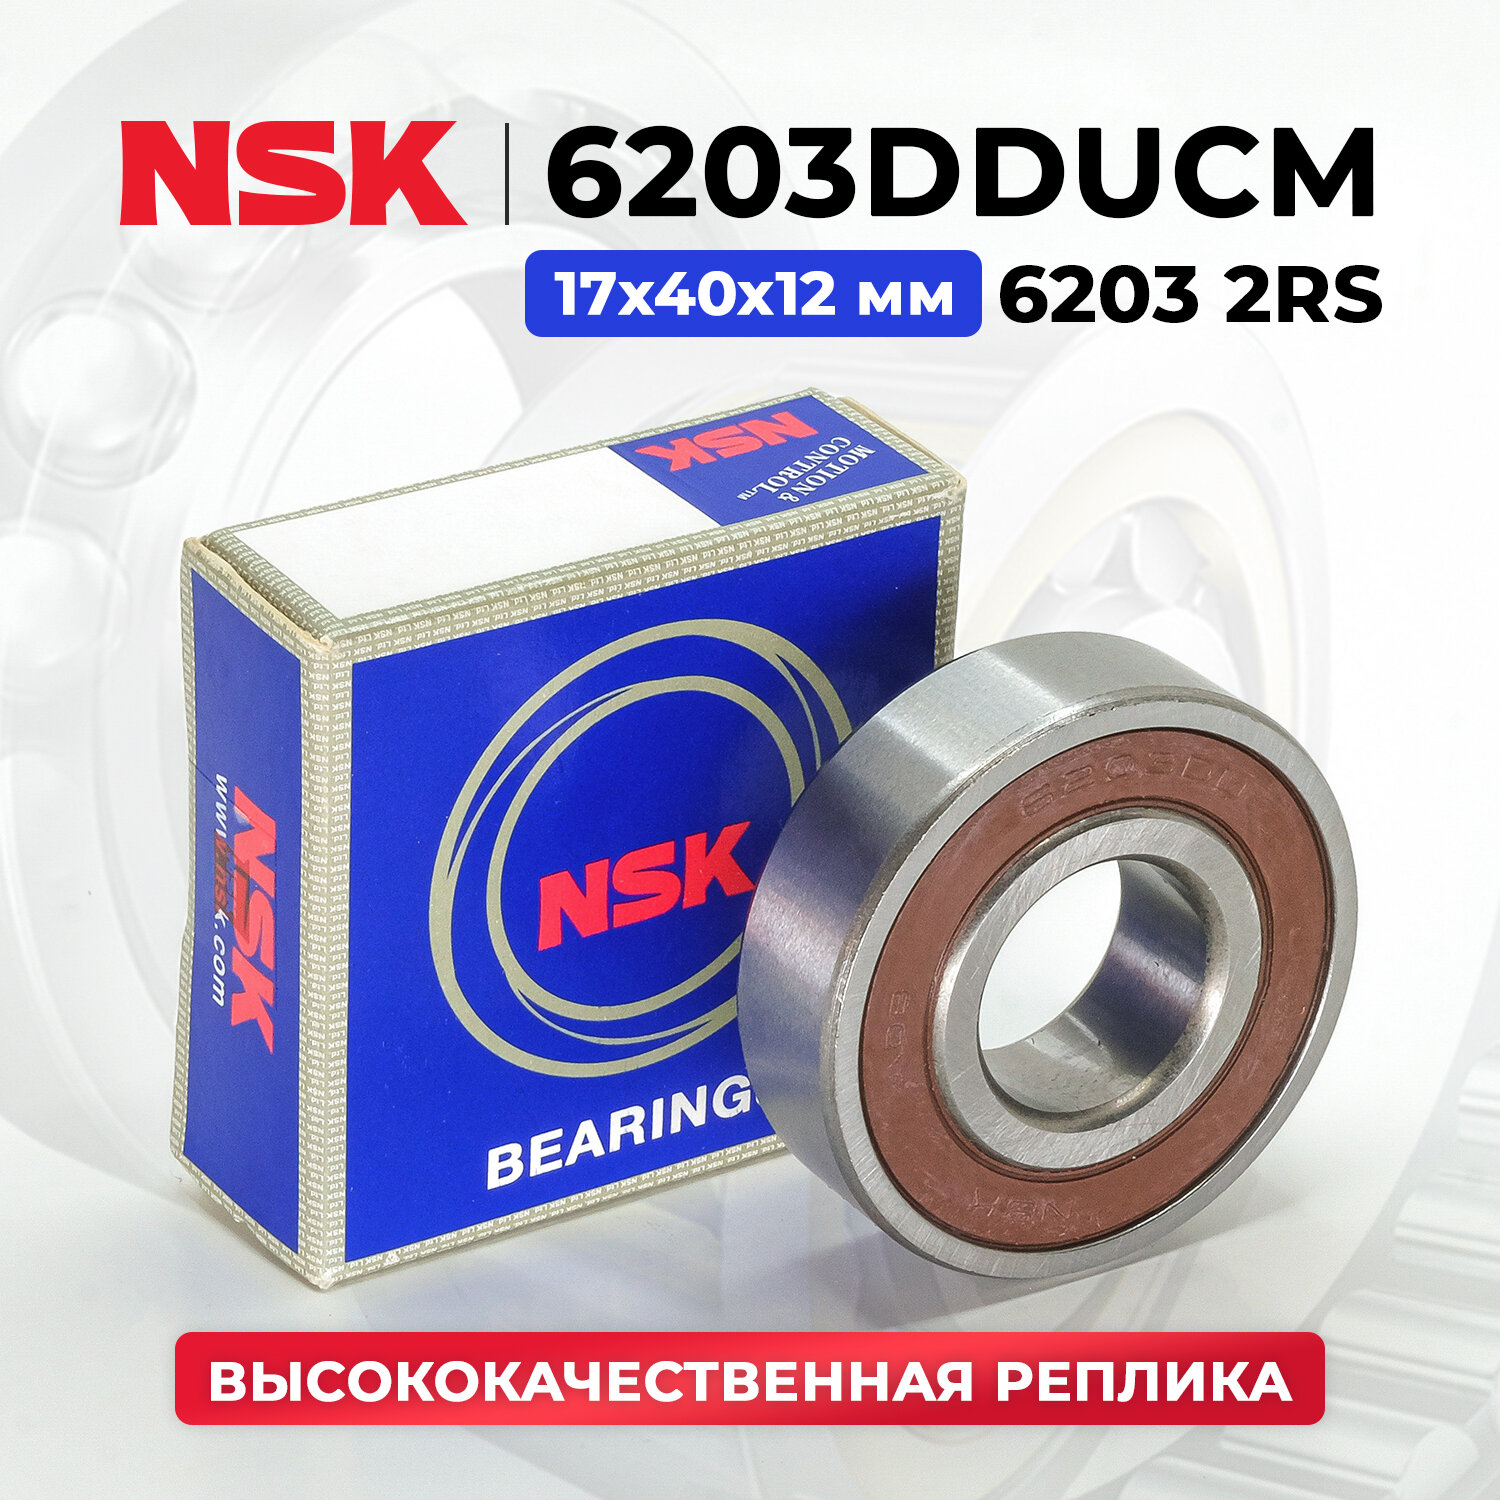 Подшипник генератора передний NSK 6203 2RS (6203DDUCM). Размер 17х40х12